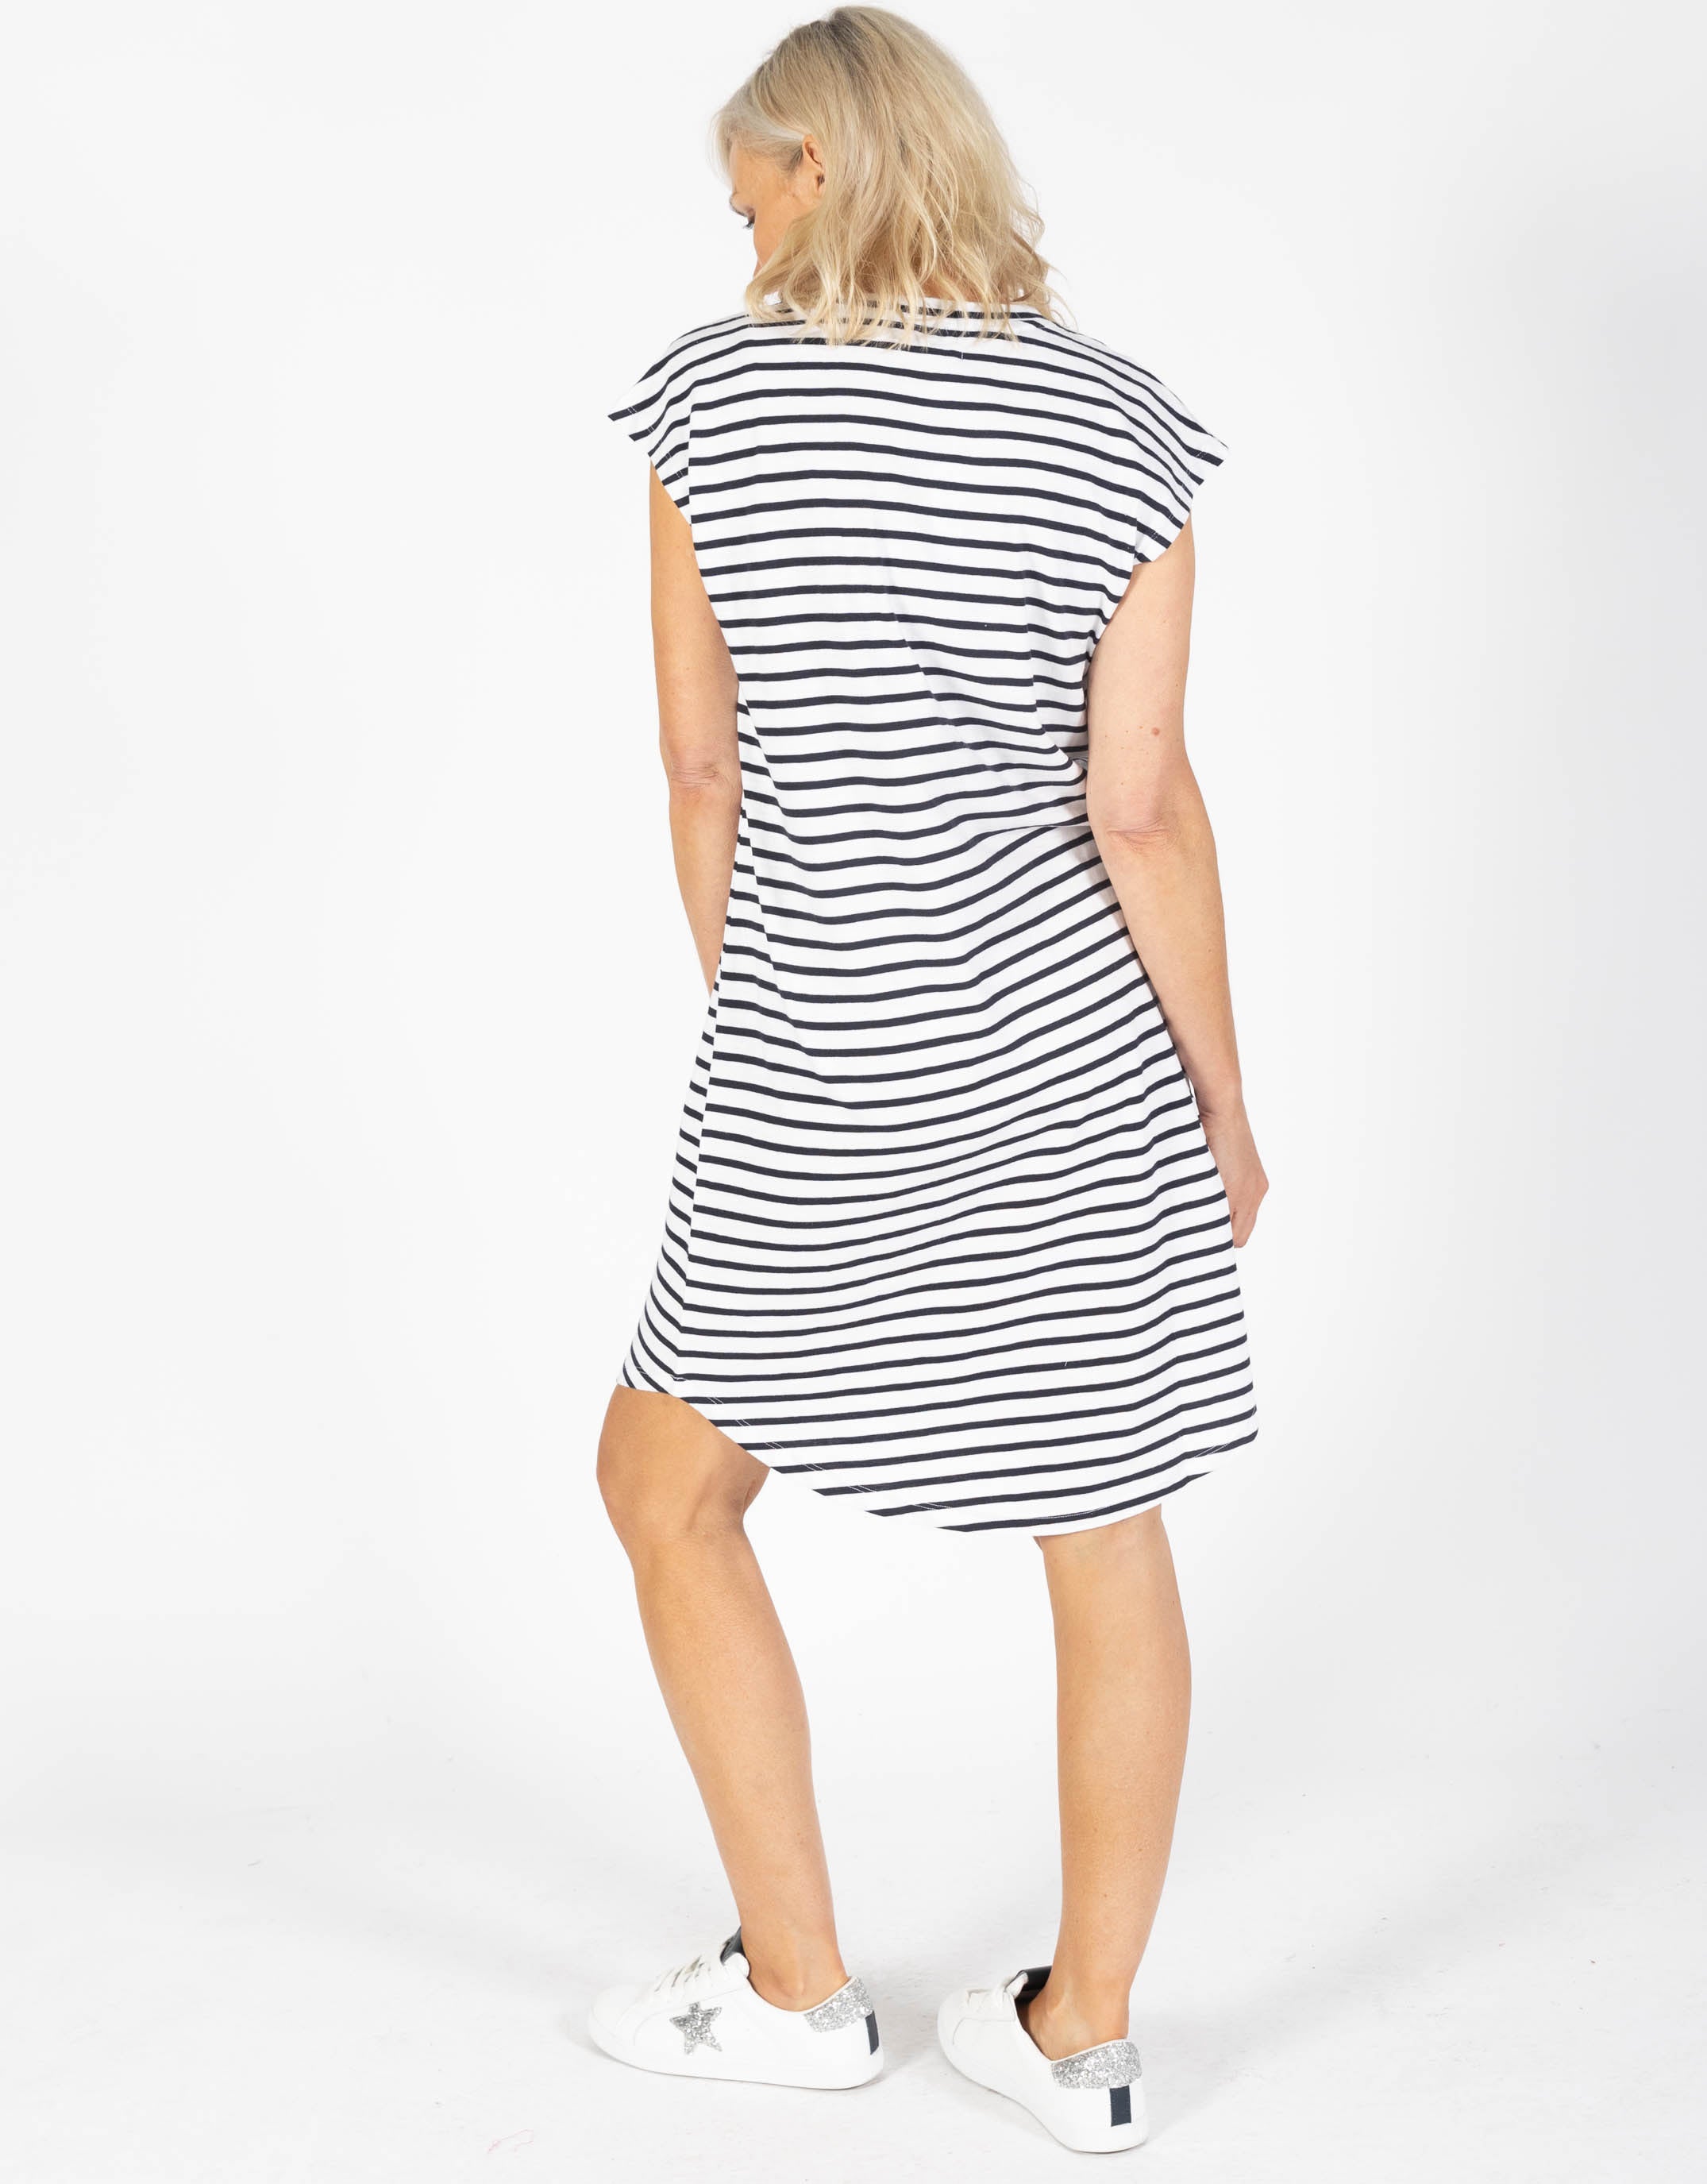 Beach Club Dress - Navy/White Stripe